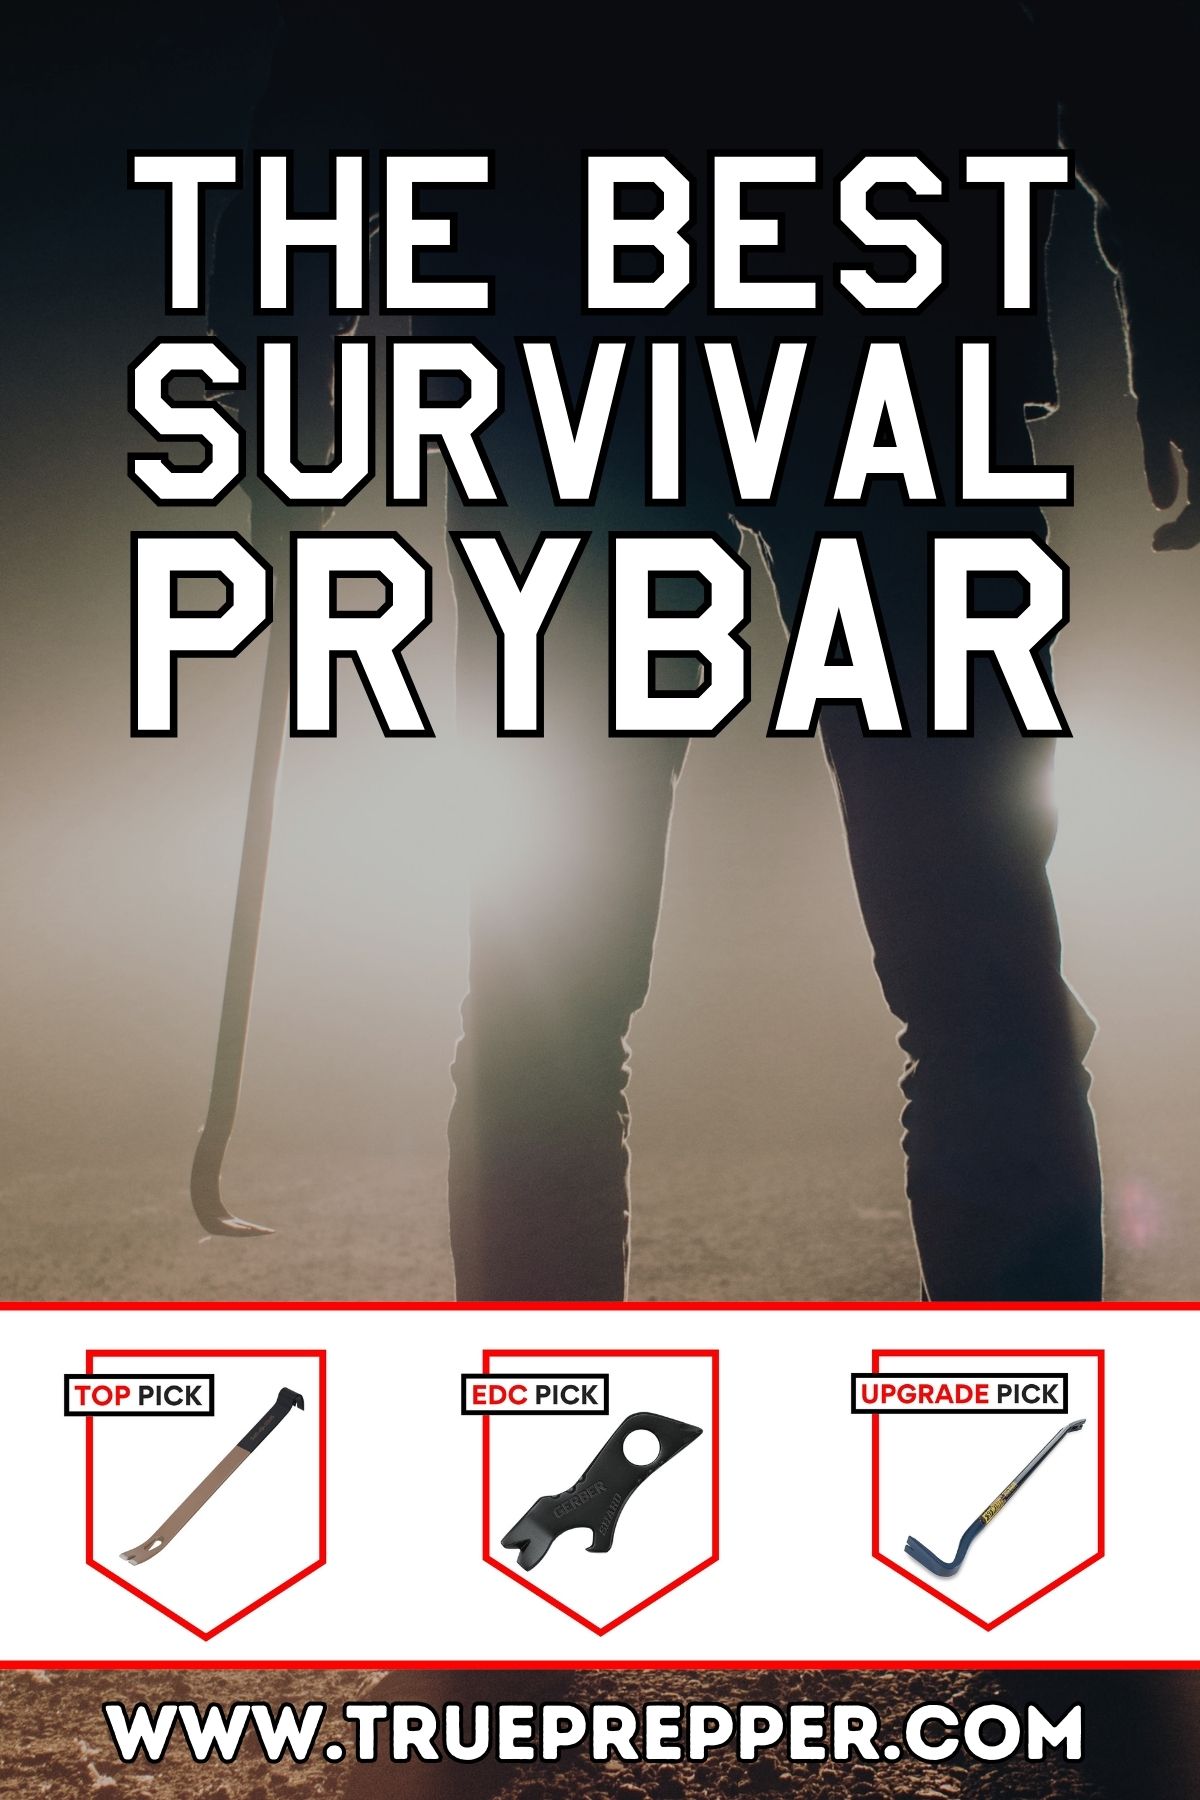 The Best Survival Prybar